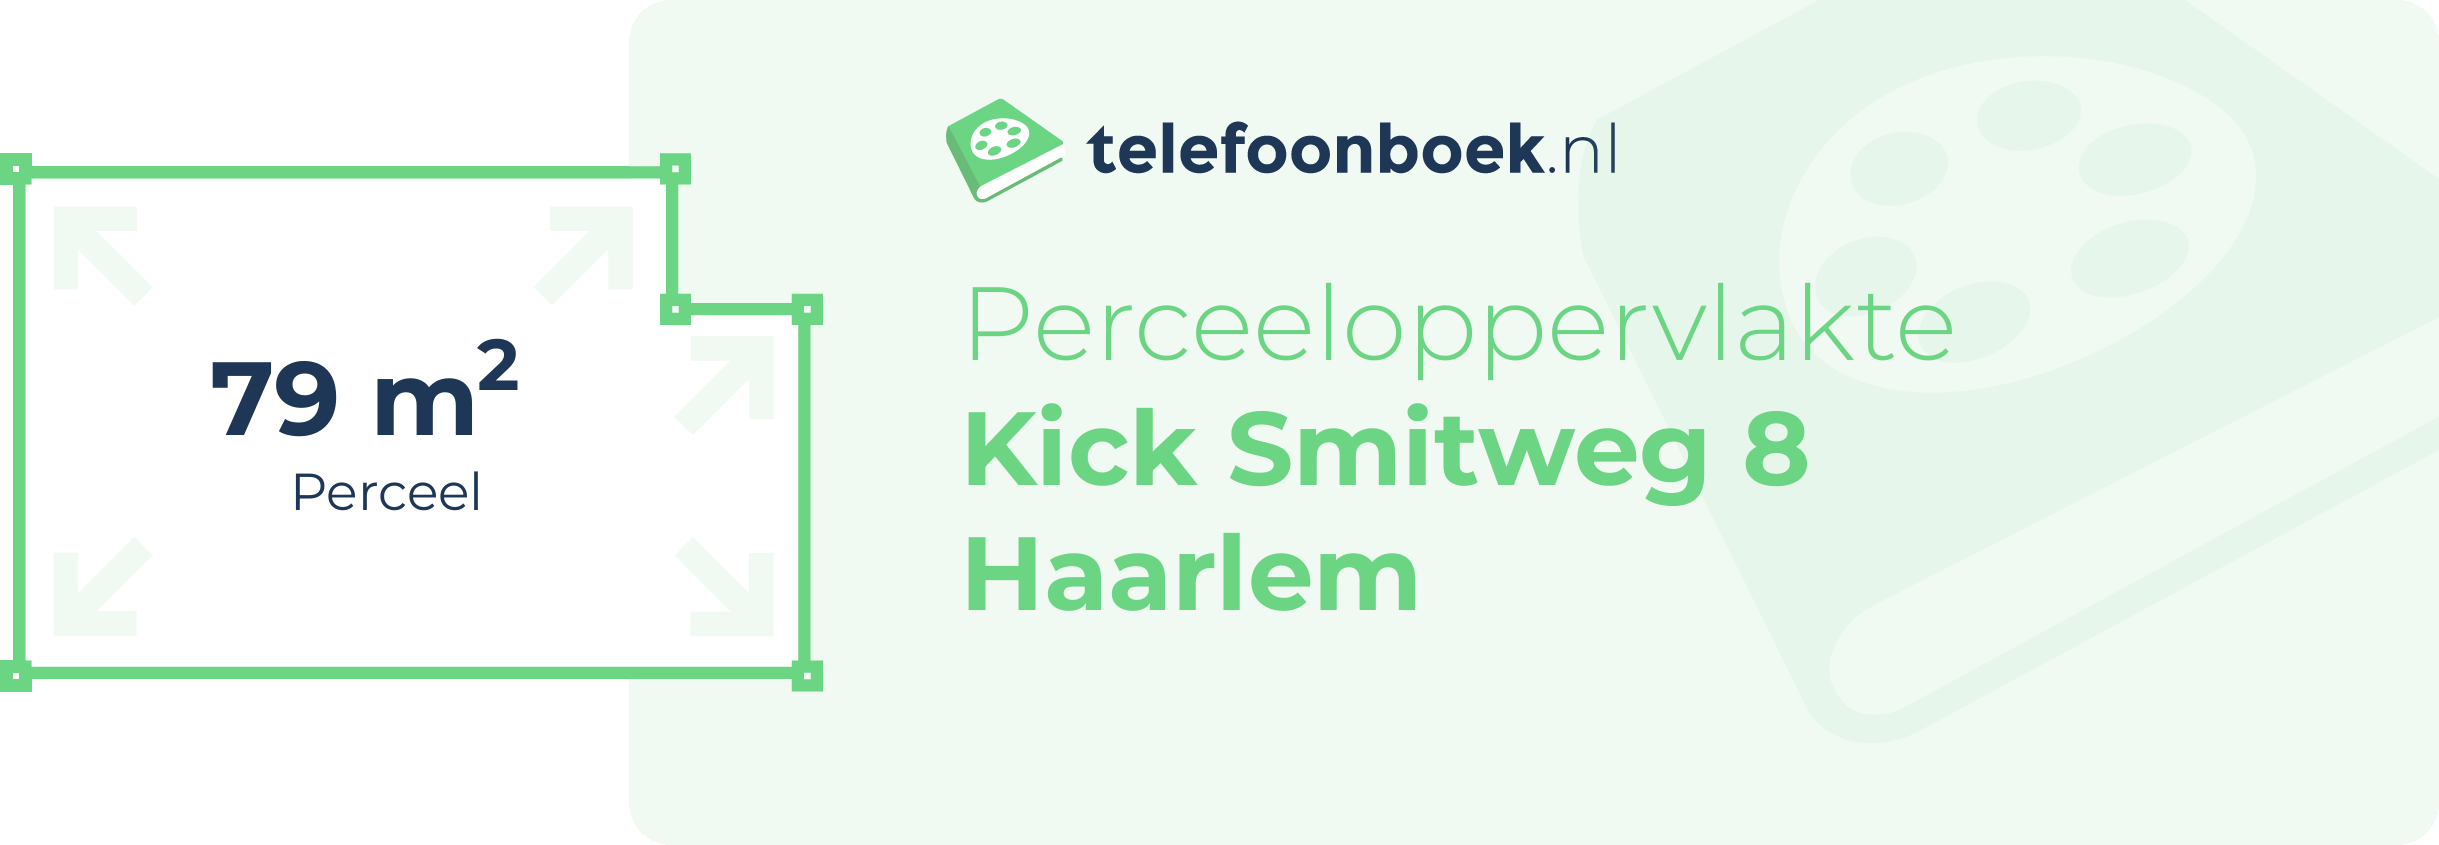 Perceeloppervlakte Kick Smitweg 8 Haarlem